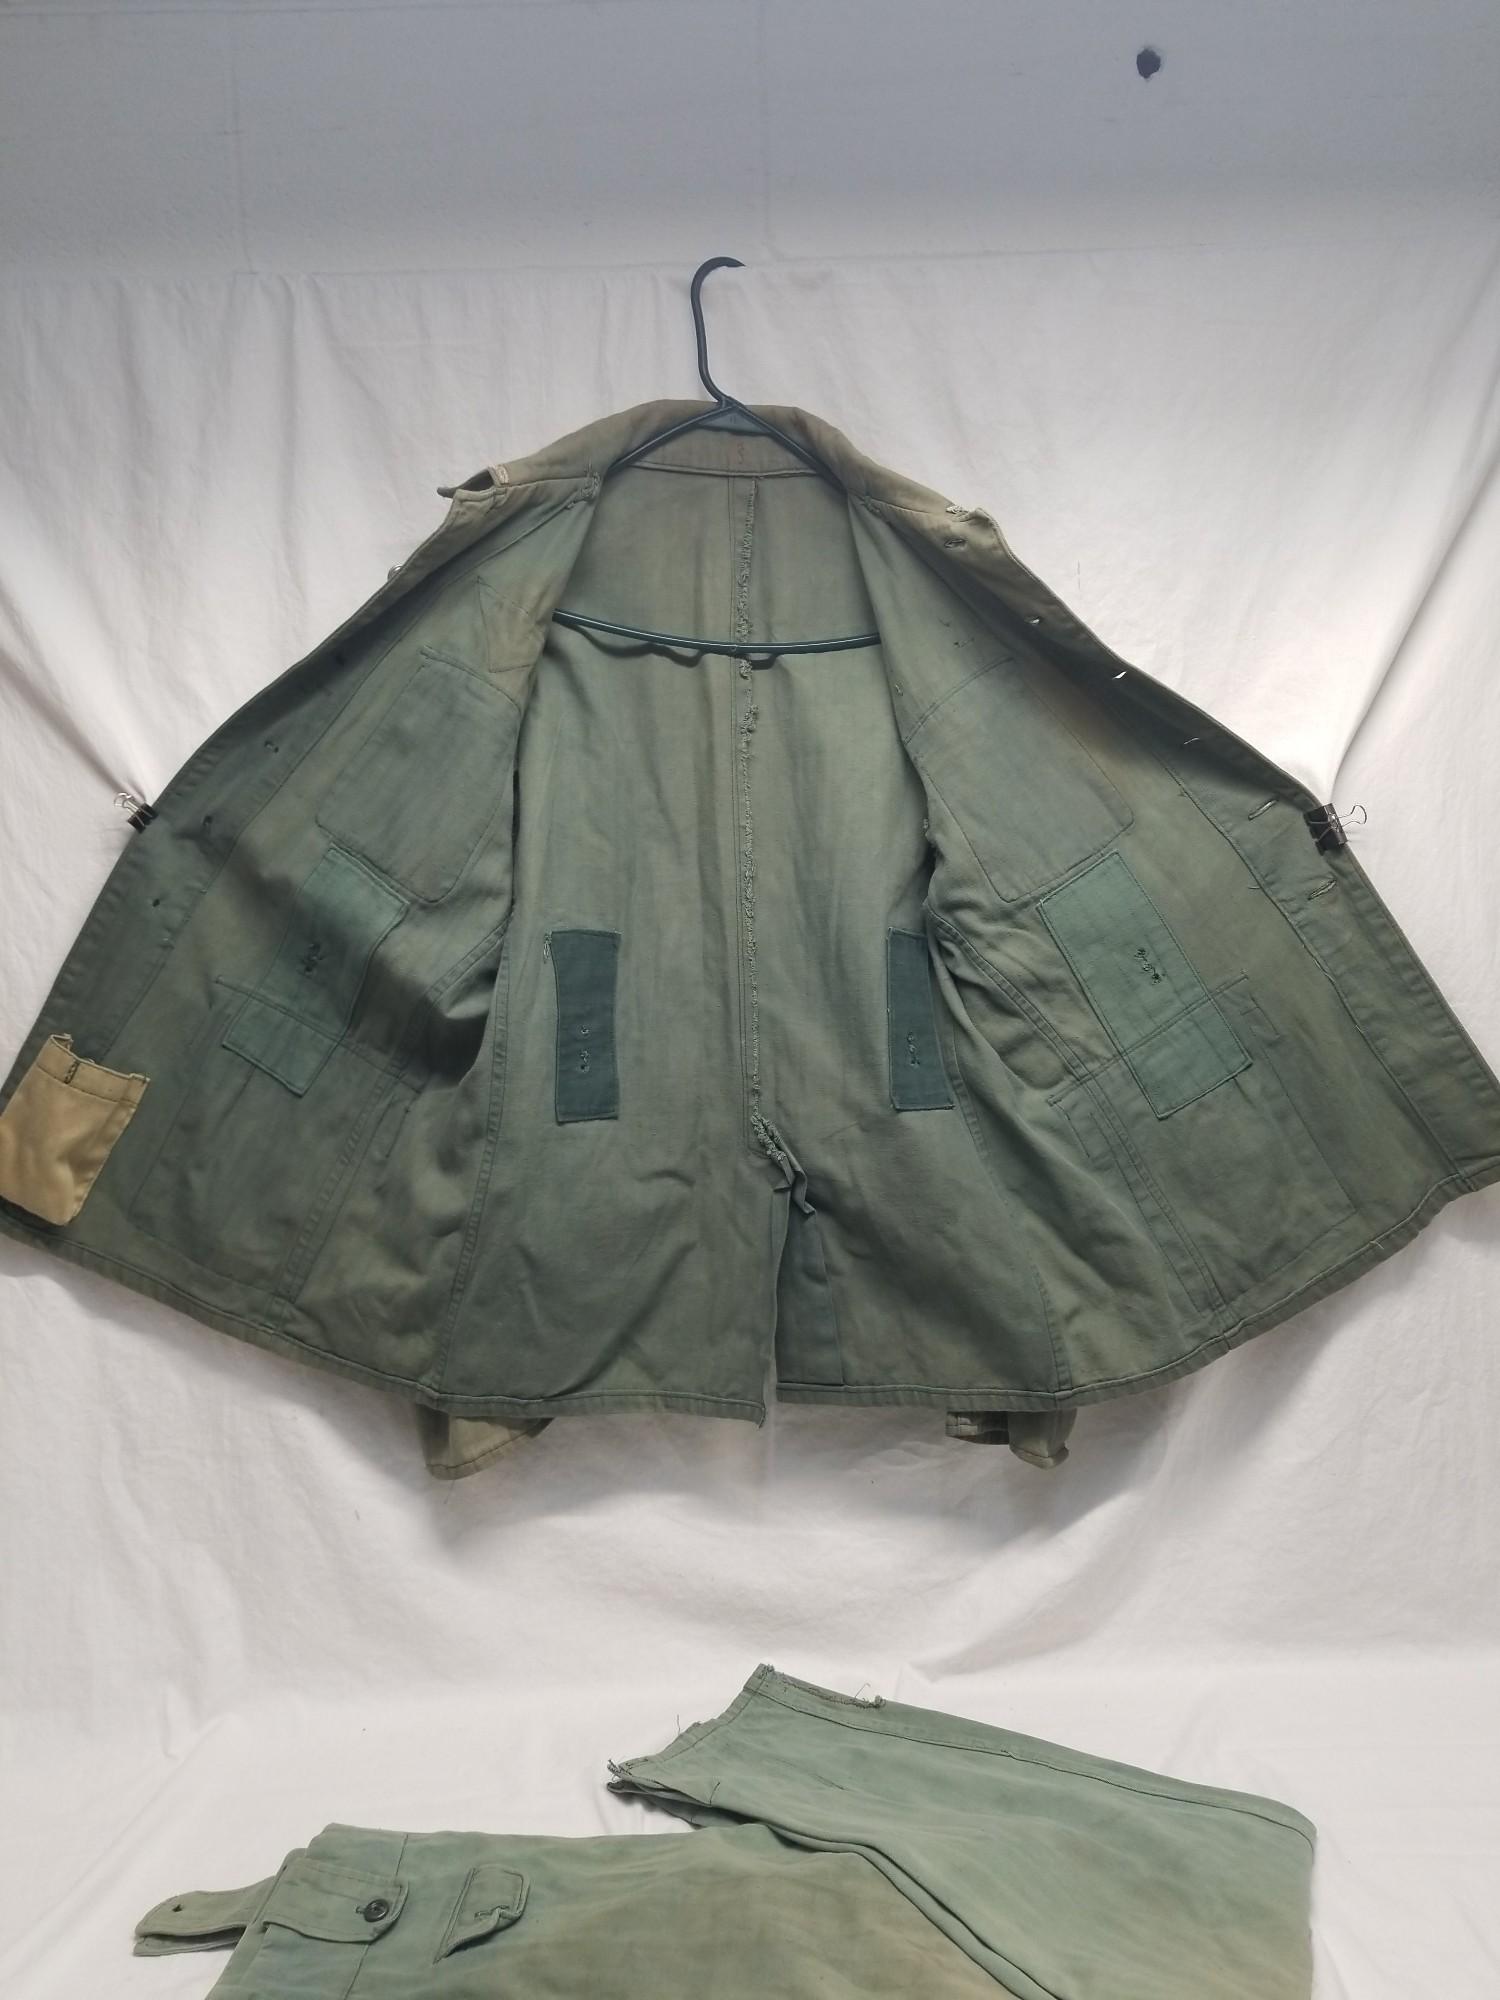 WWII Nazi coat and pant